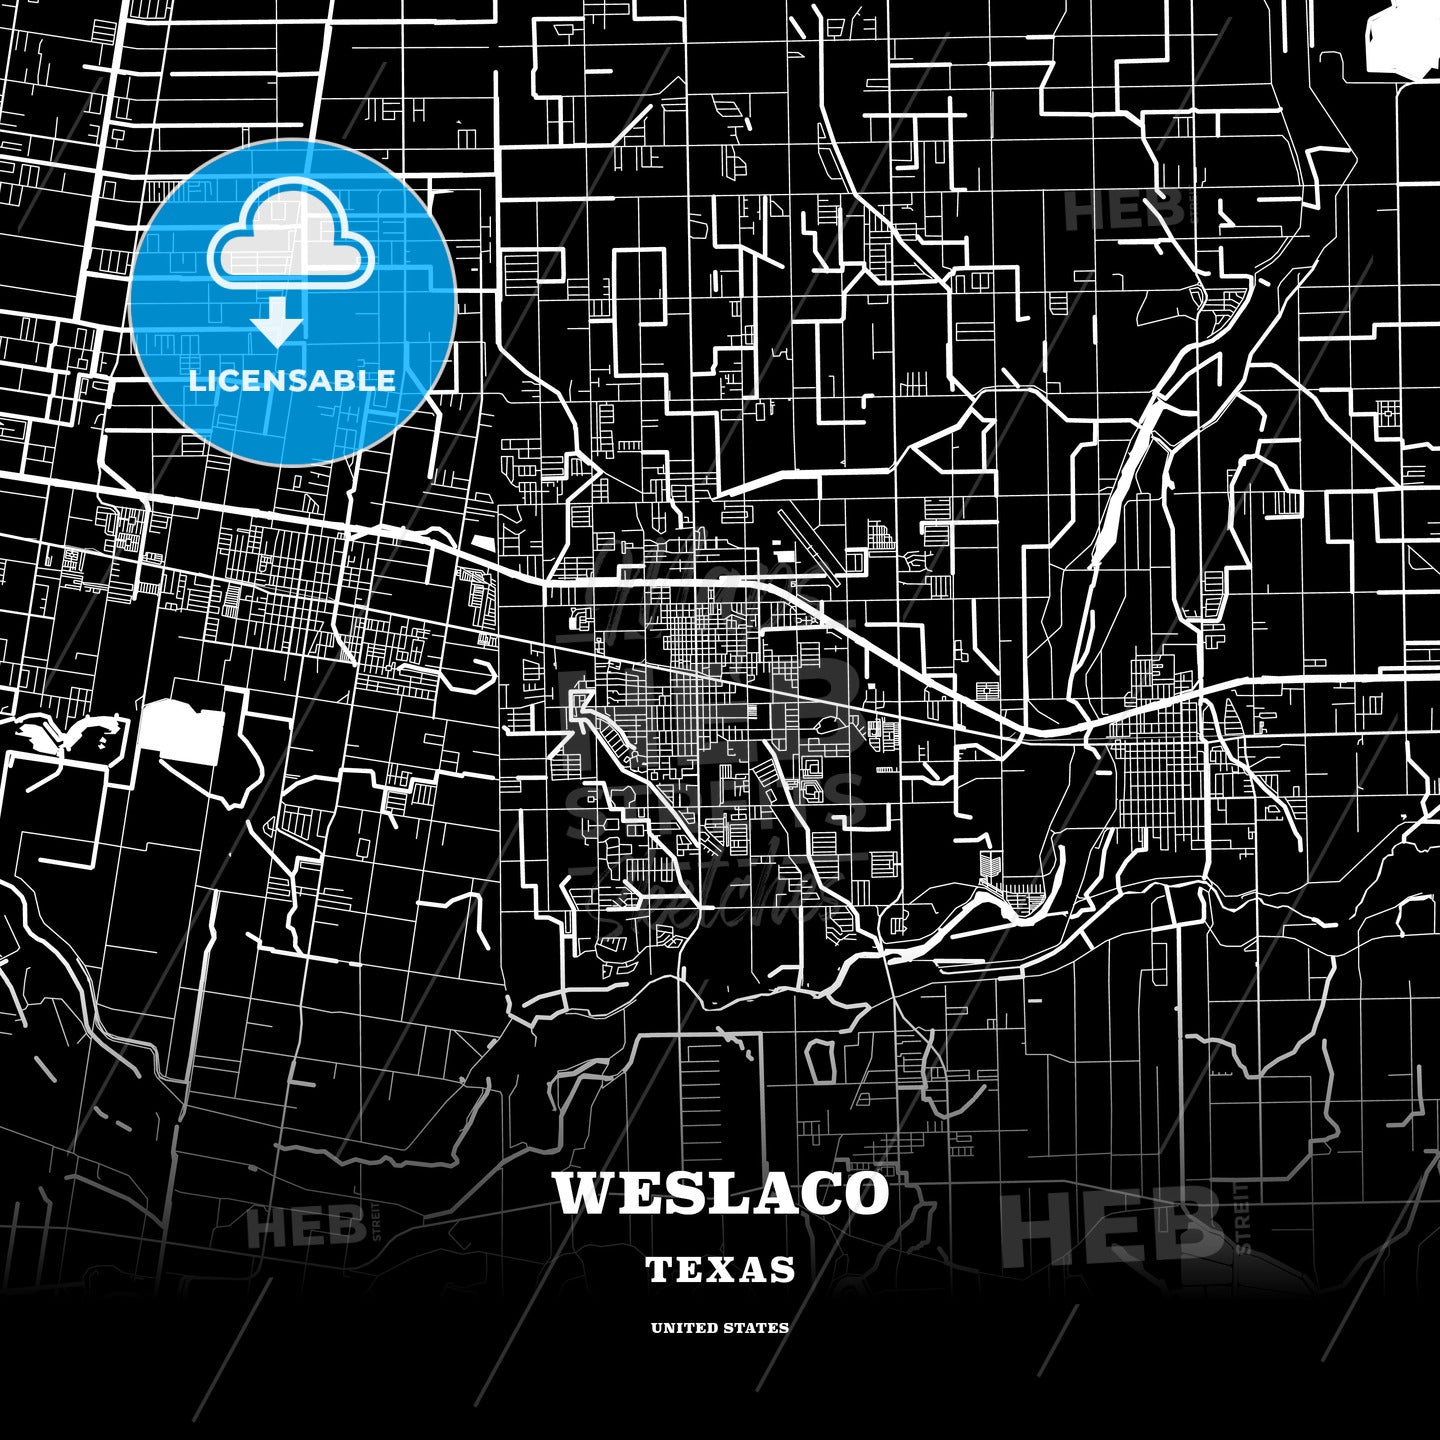 Weslaco, Texas, USA map